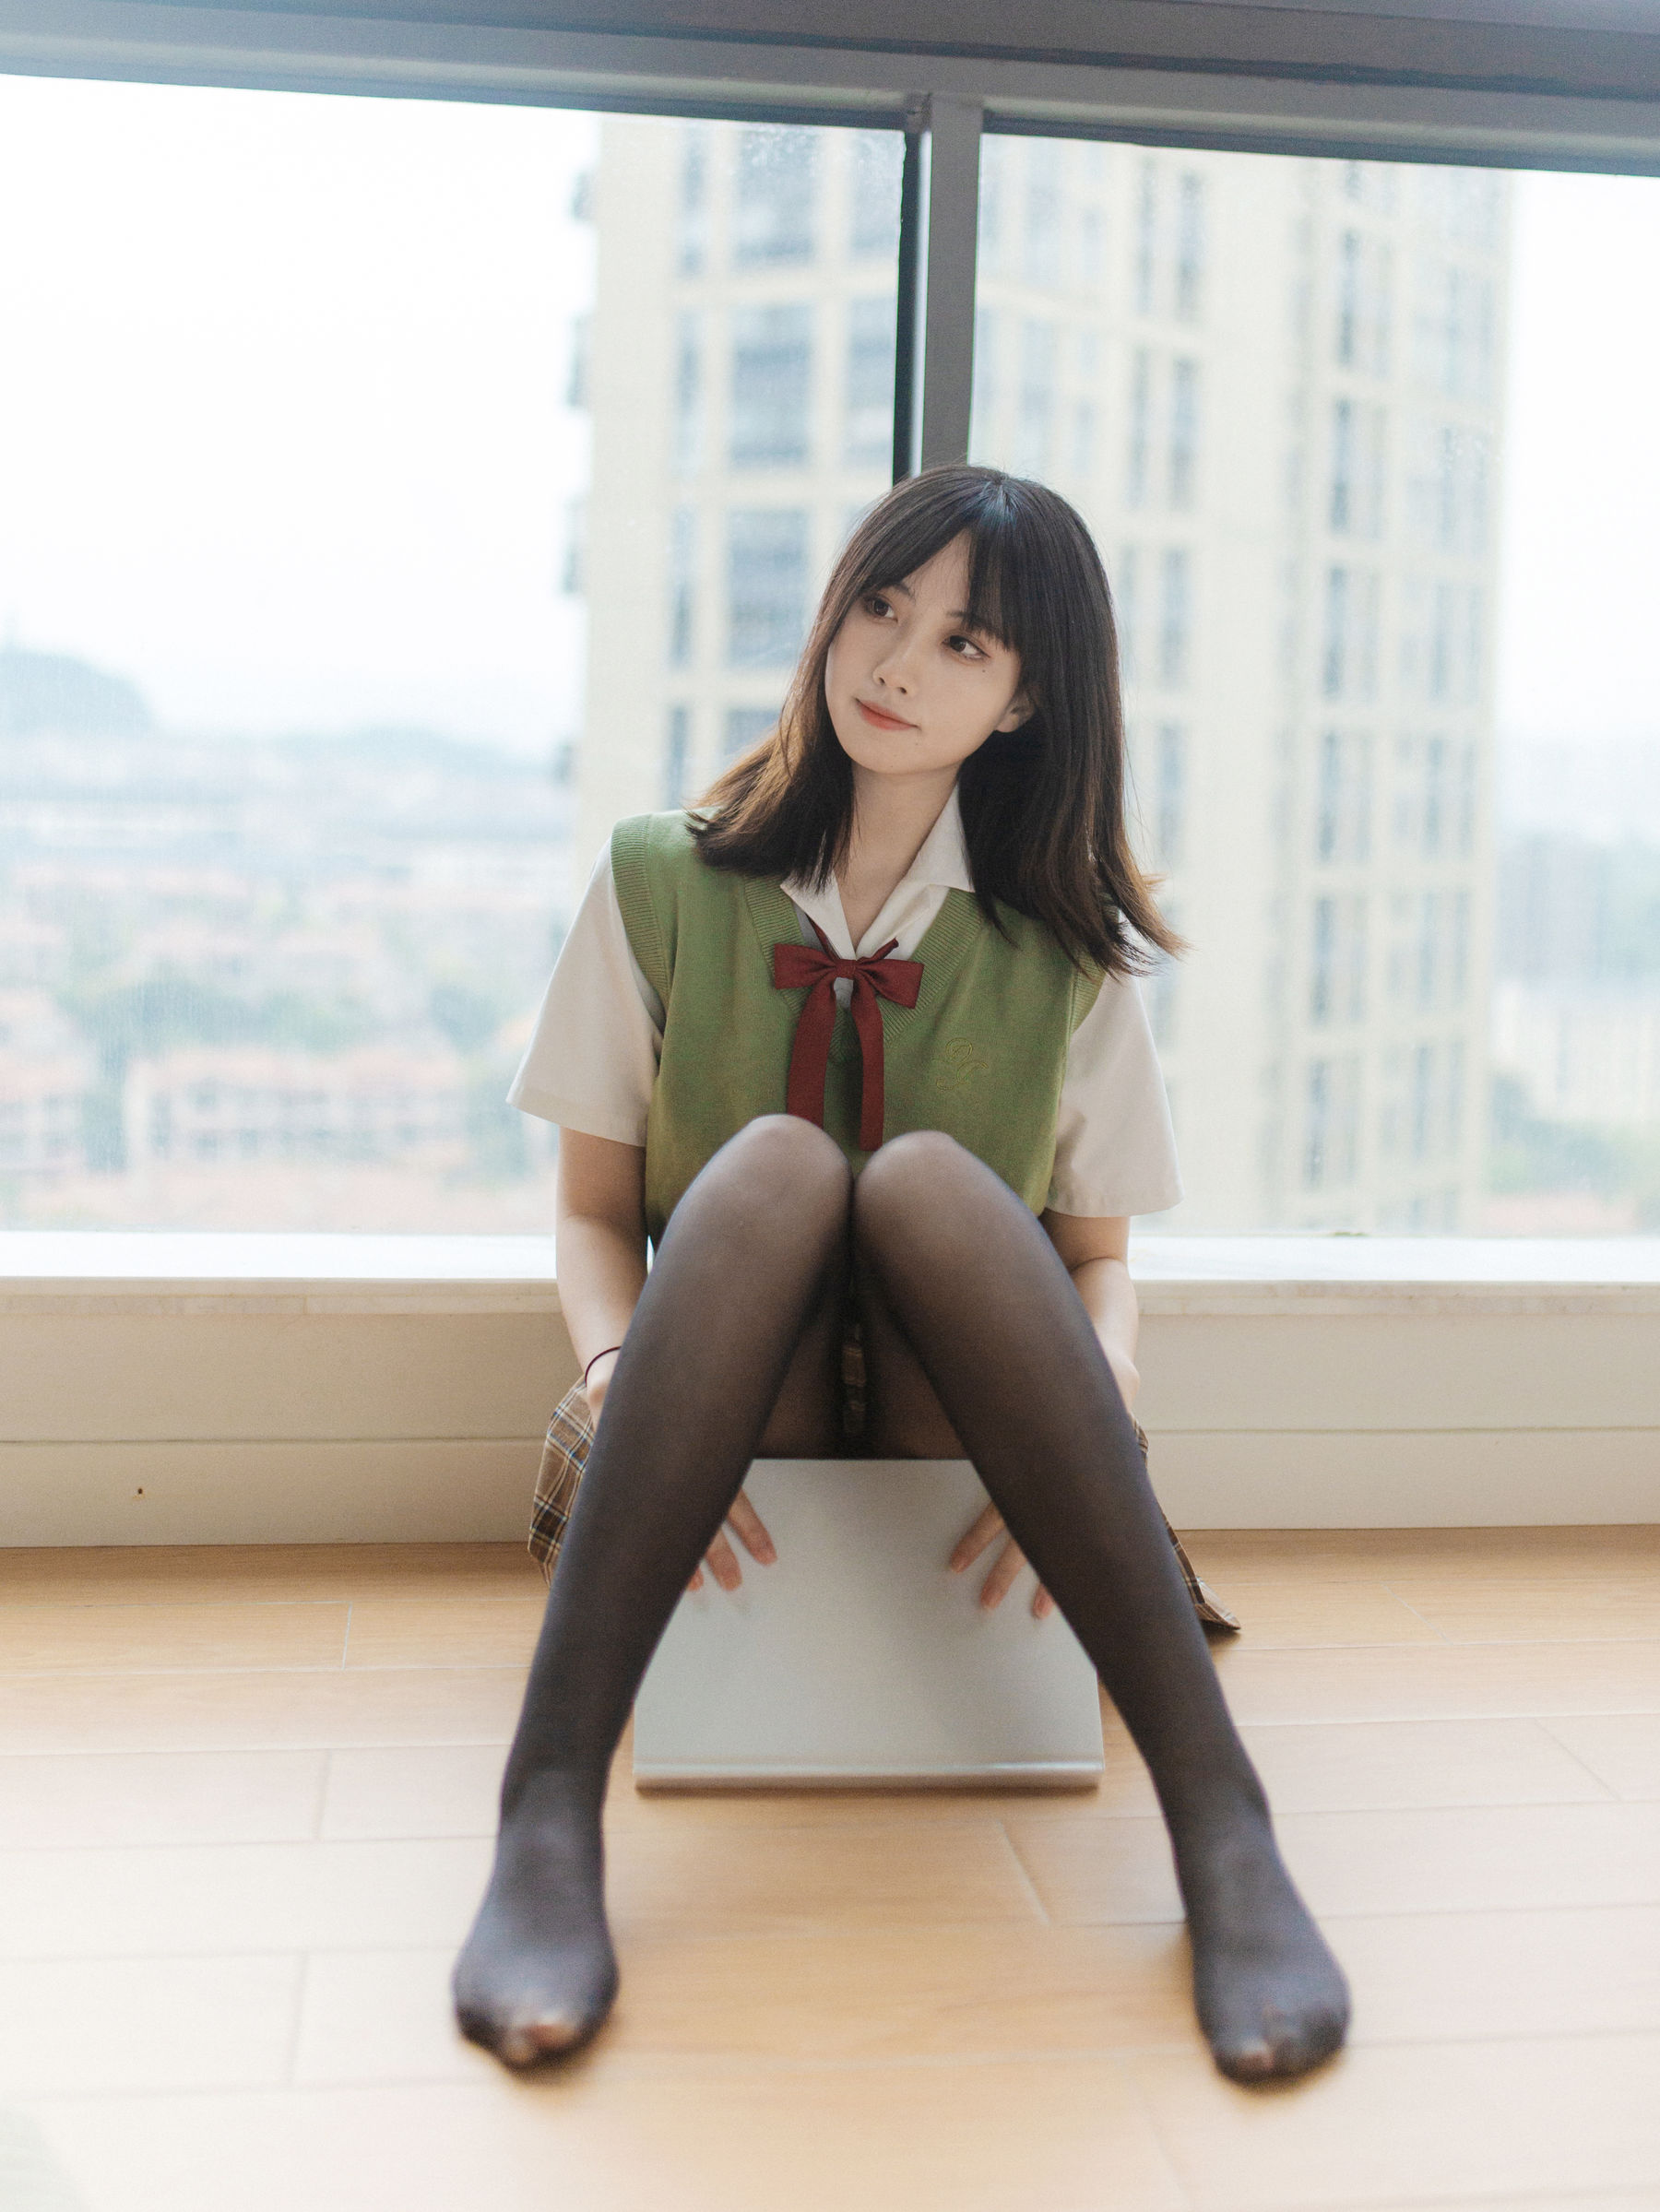 [COS Welfare] Dimensional girl Nianxue ww – waiting for you to finish class photo set